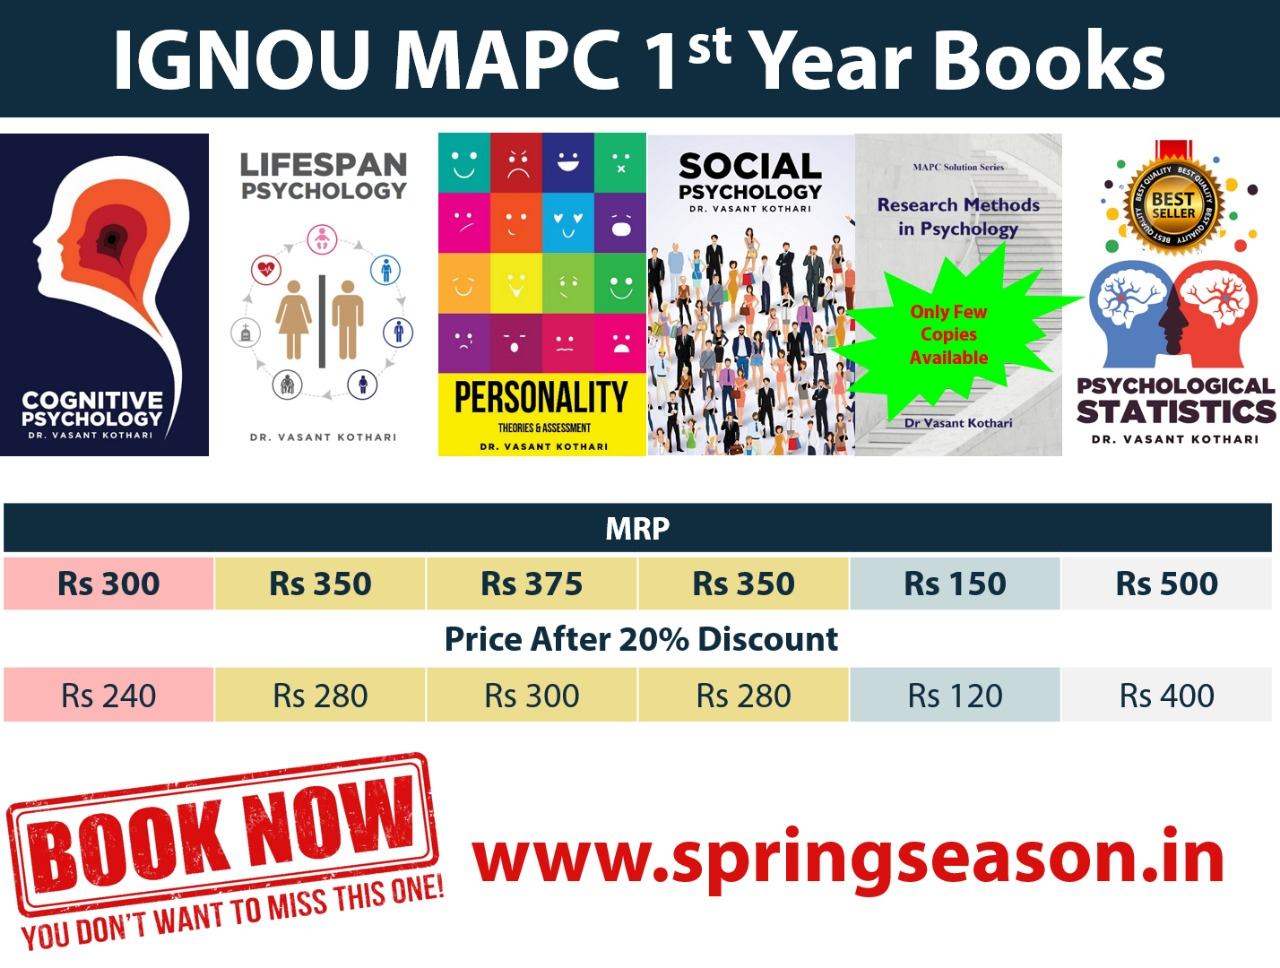 IGNOU MAPC Books on www.springseason.in